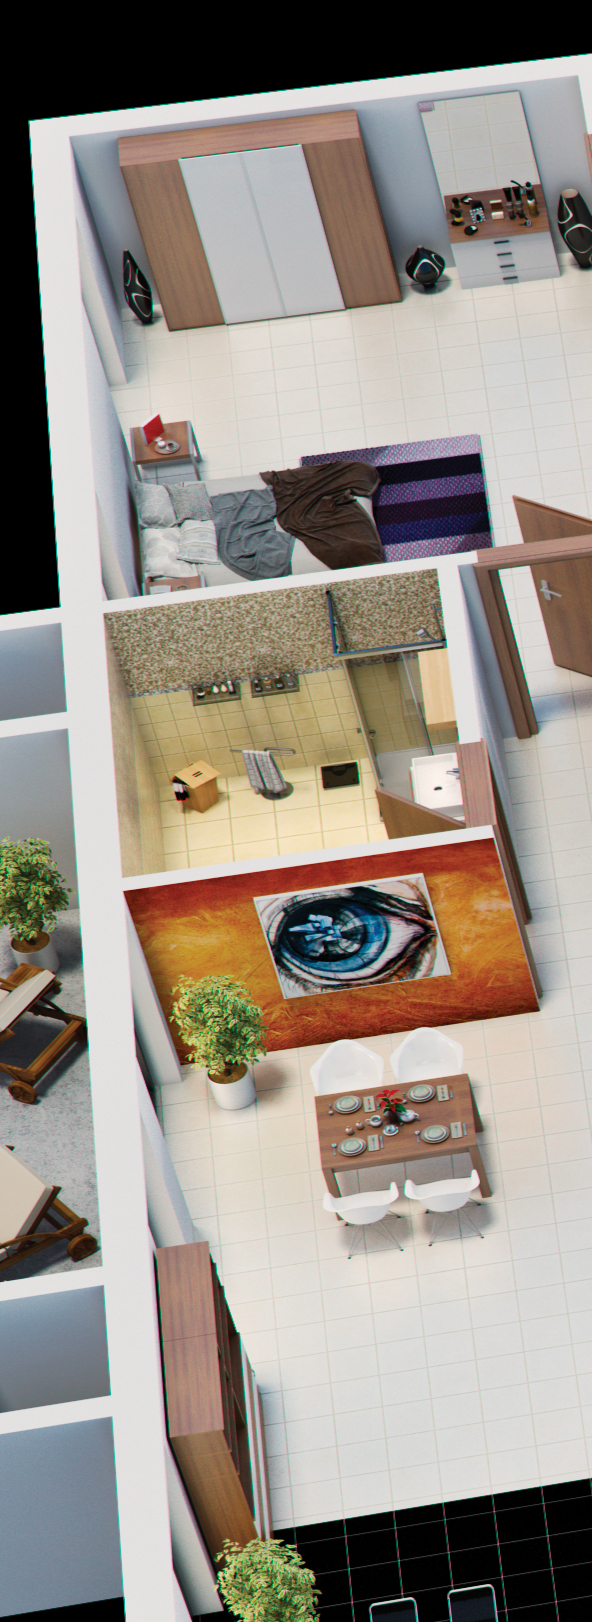 3D Isometric Interior visualization 3dsmax vray floor plan FLOOR composition rendering 3D model furniture cgmtl hi resolution